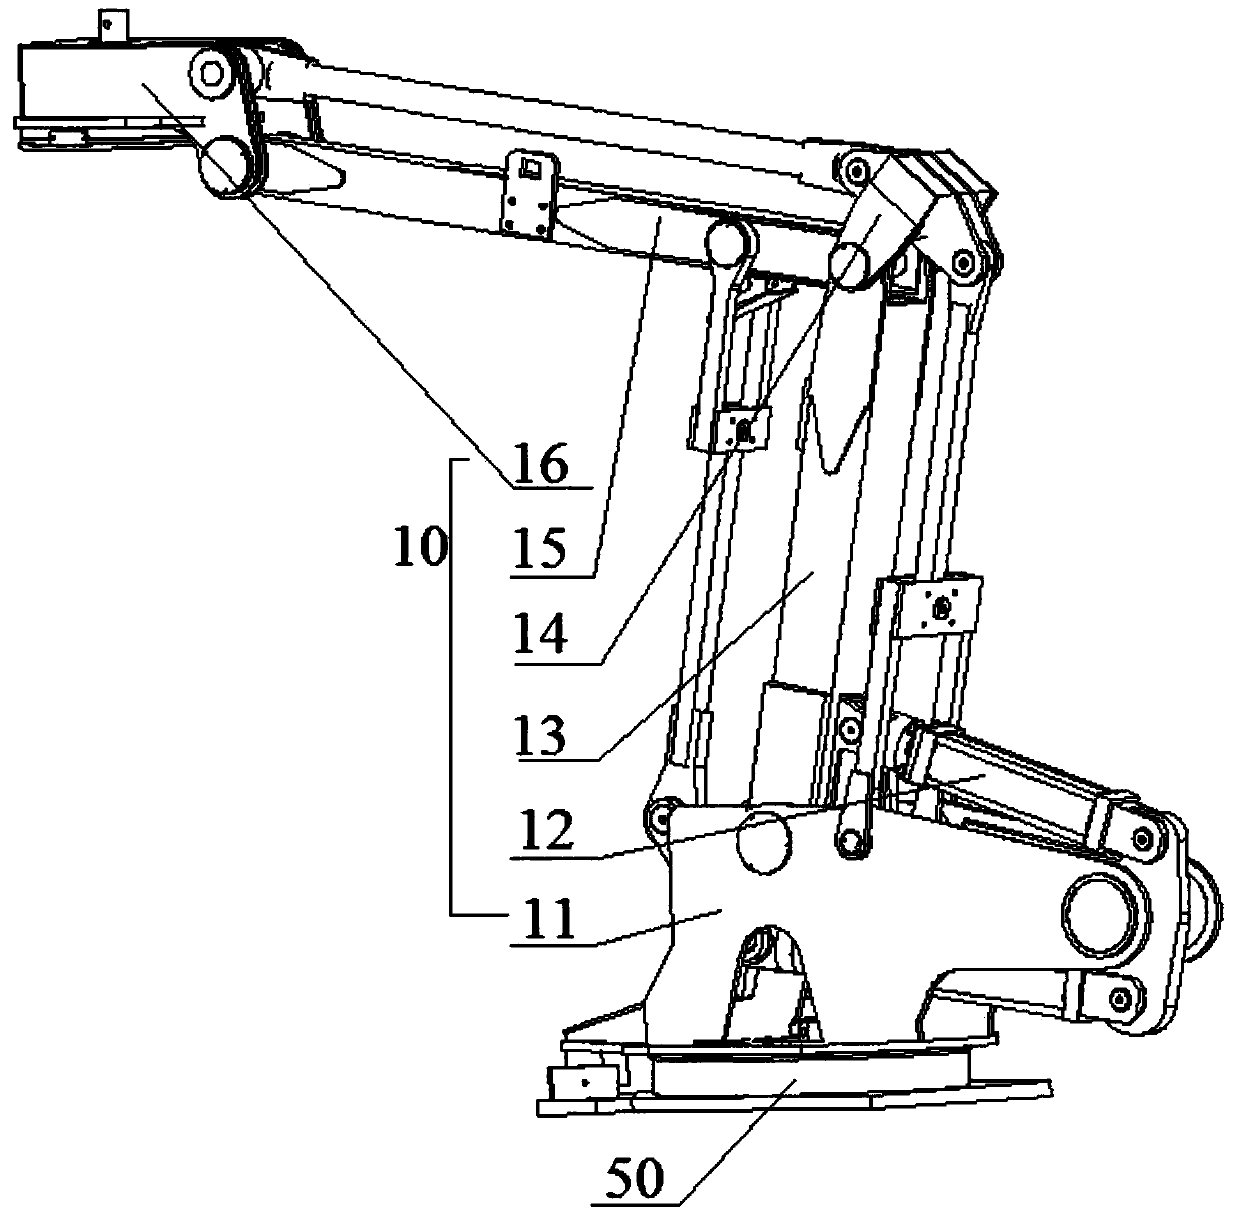 Heavy load mechanical arm